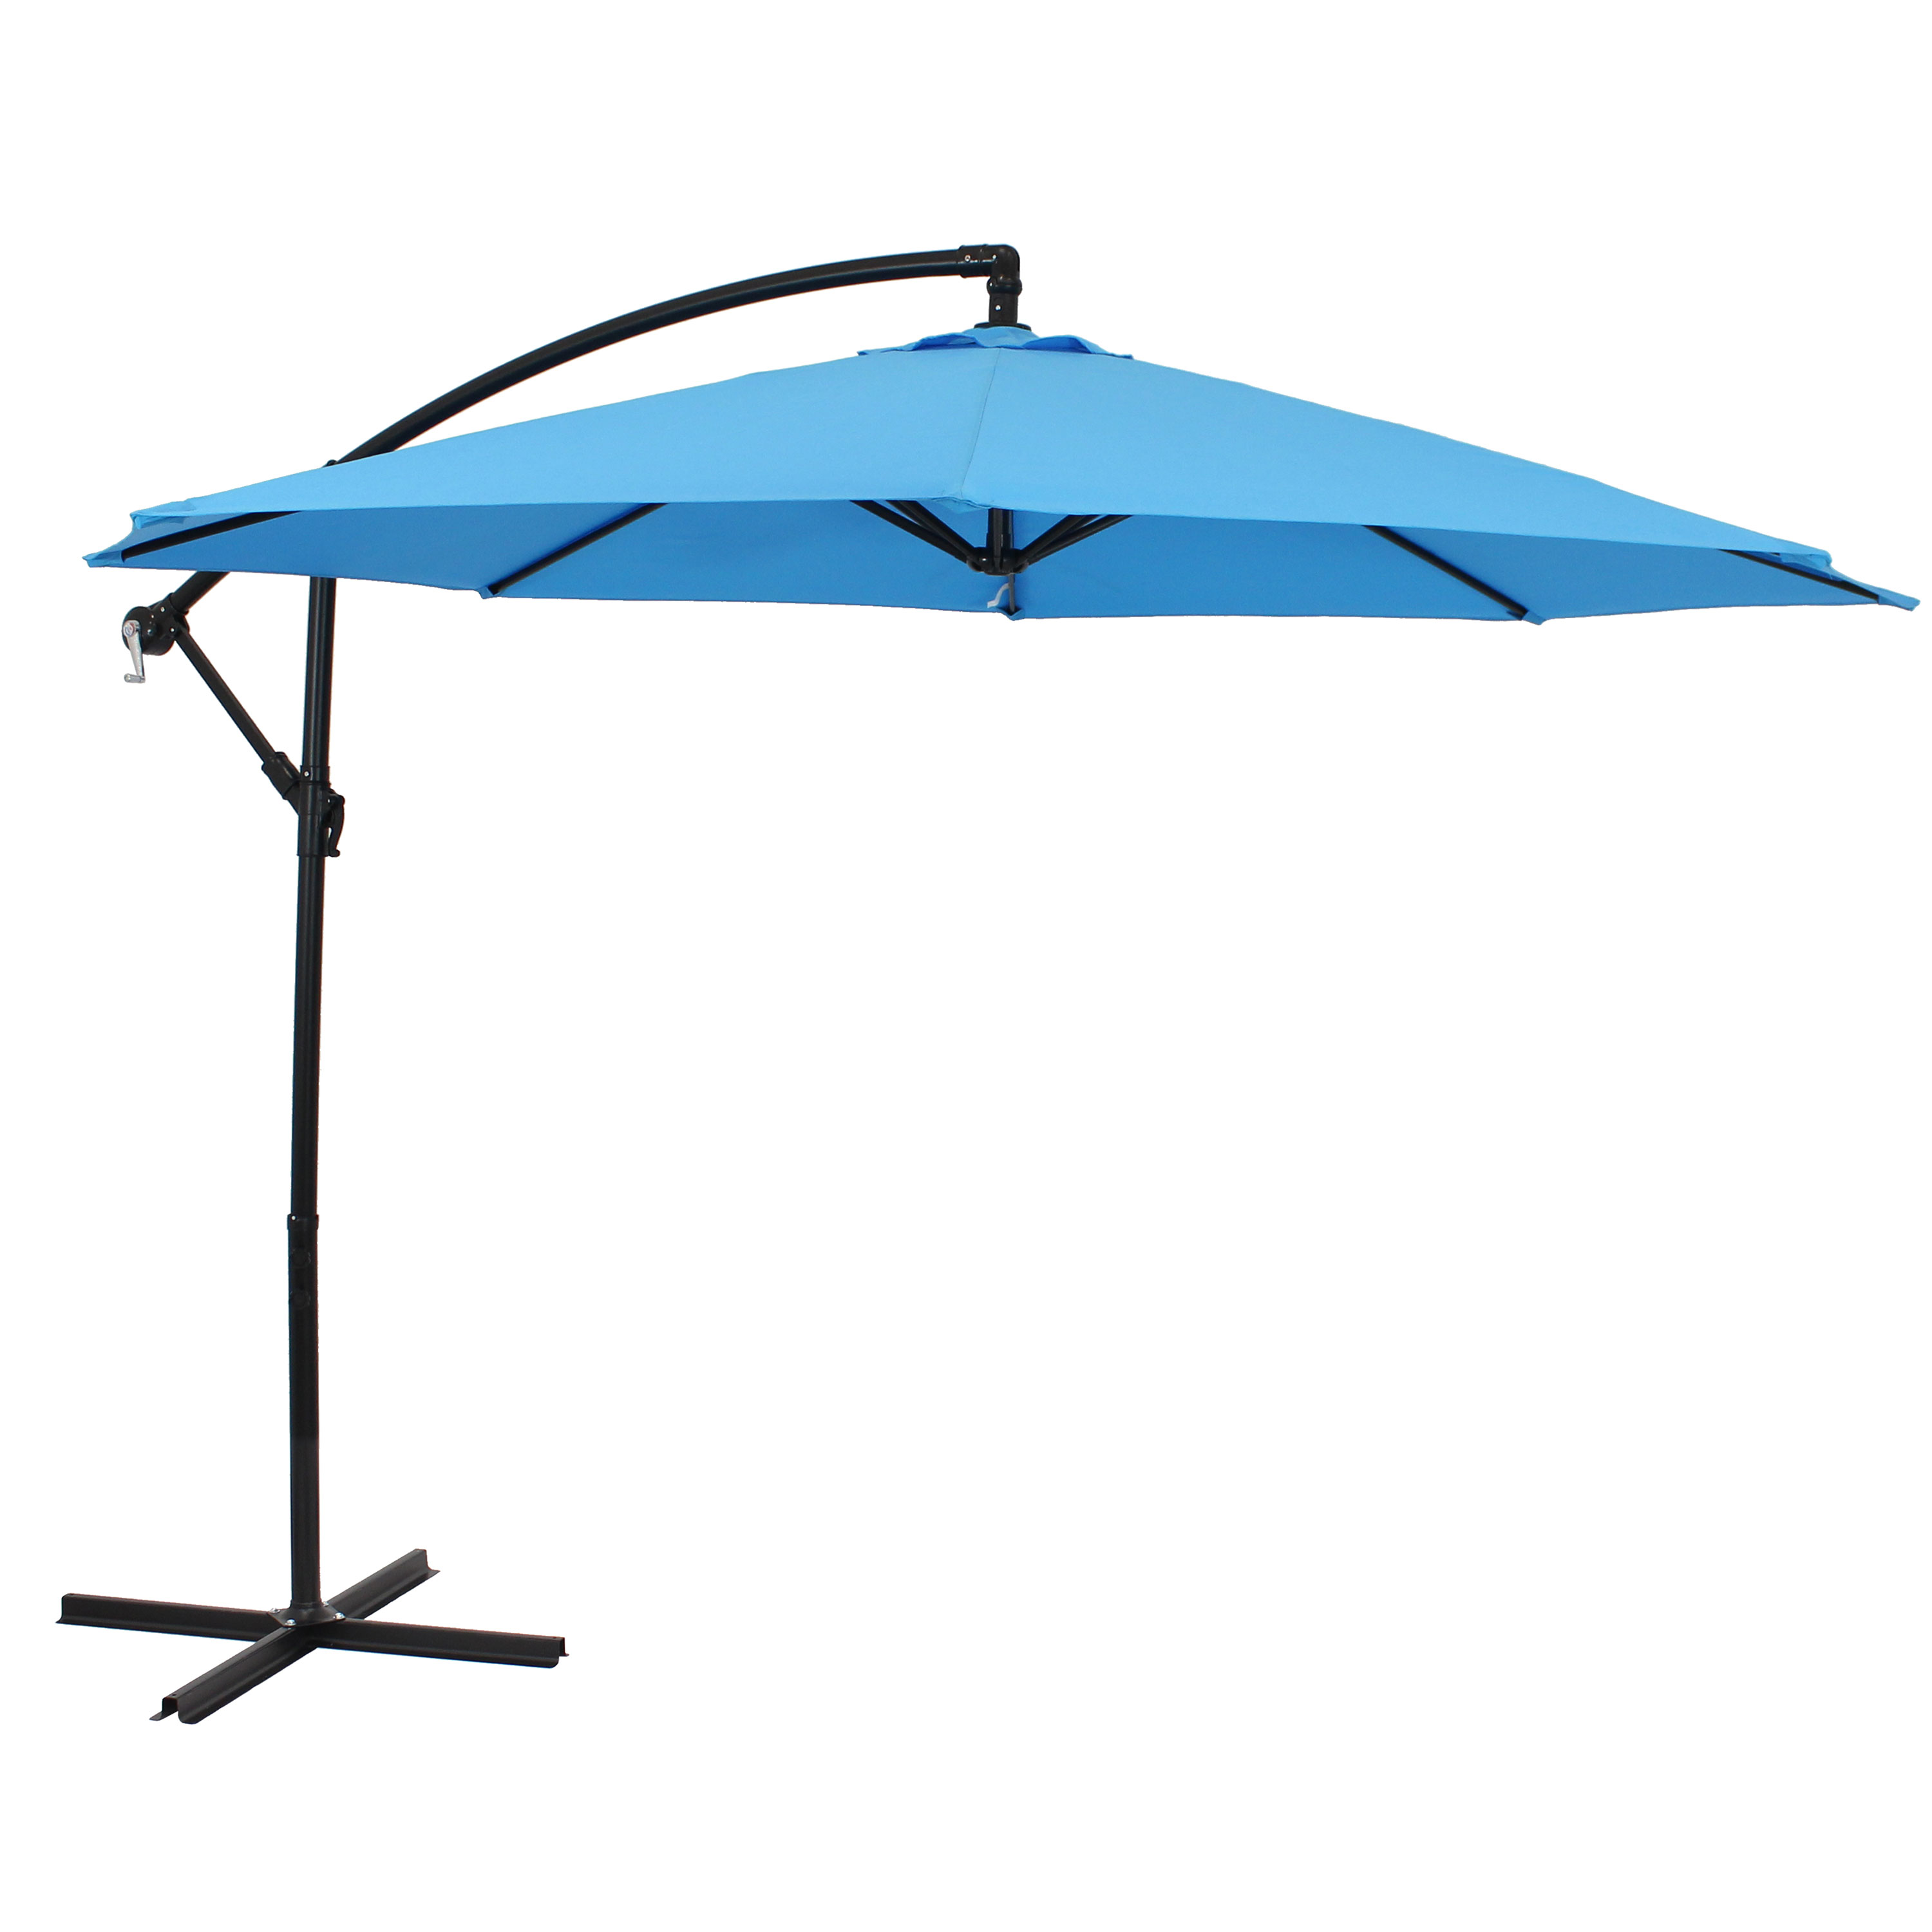 Sunnydaze Offset Outdoor Patio Umbrella with Crank - 9-Foot - Azure